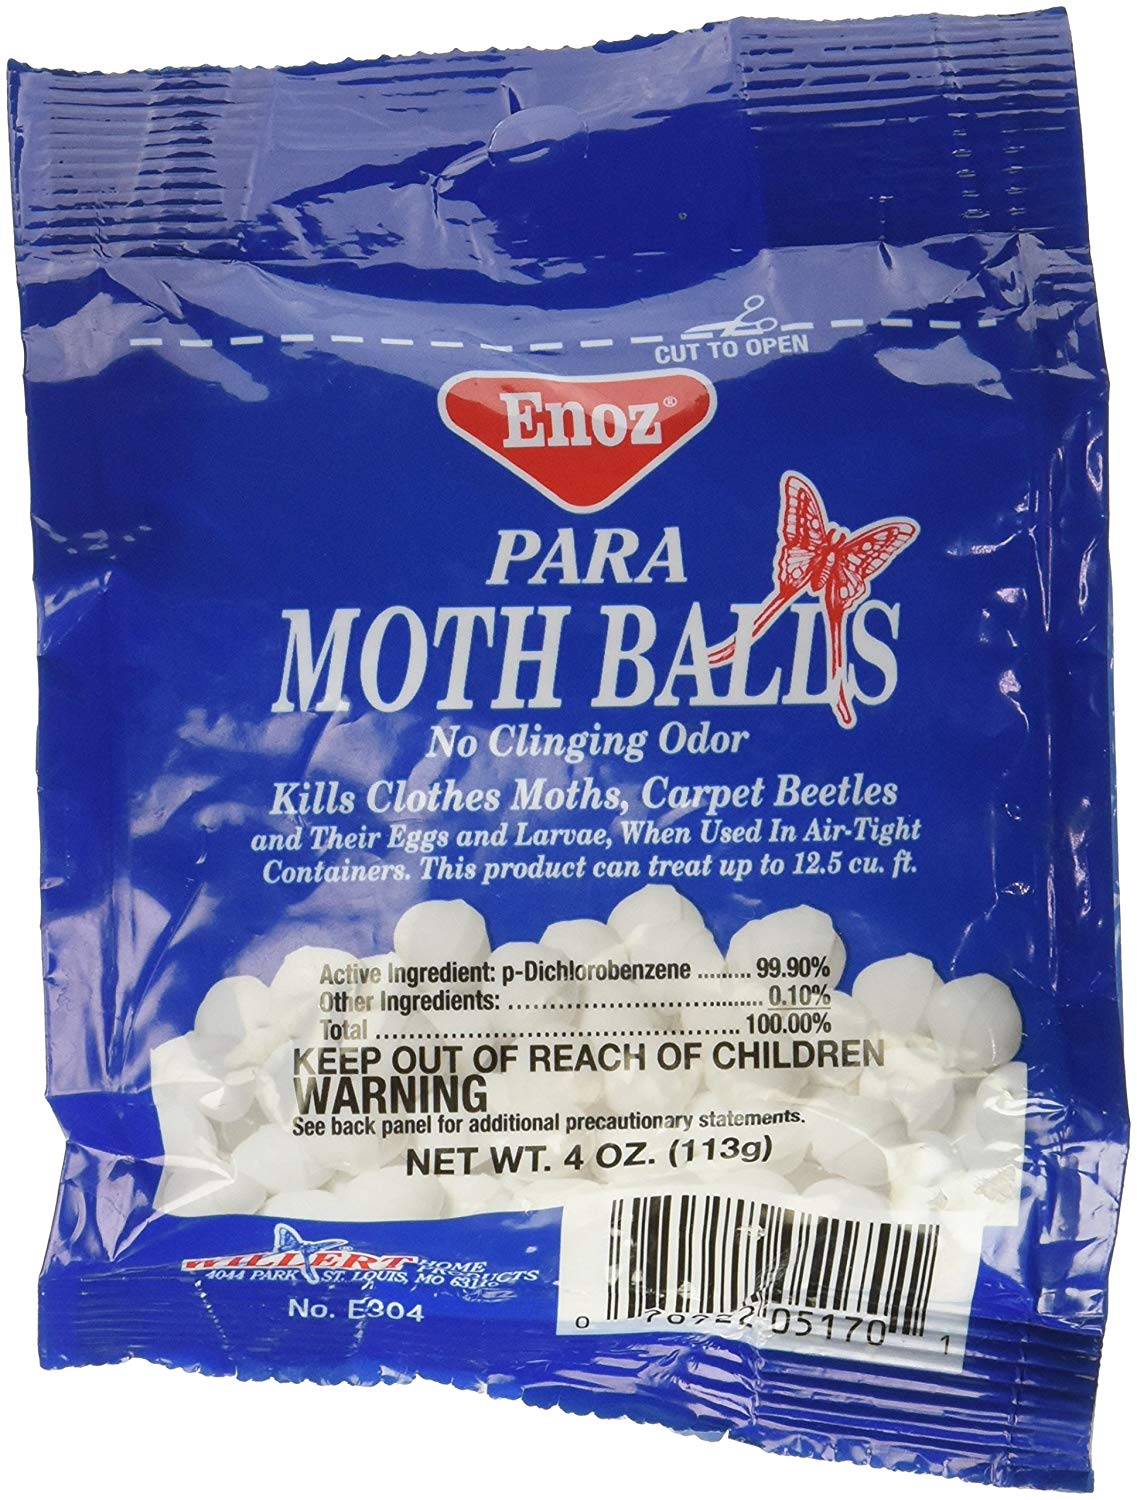 Enoz Original Moth Balls  4 oz Each 4 Pack